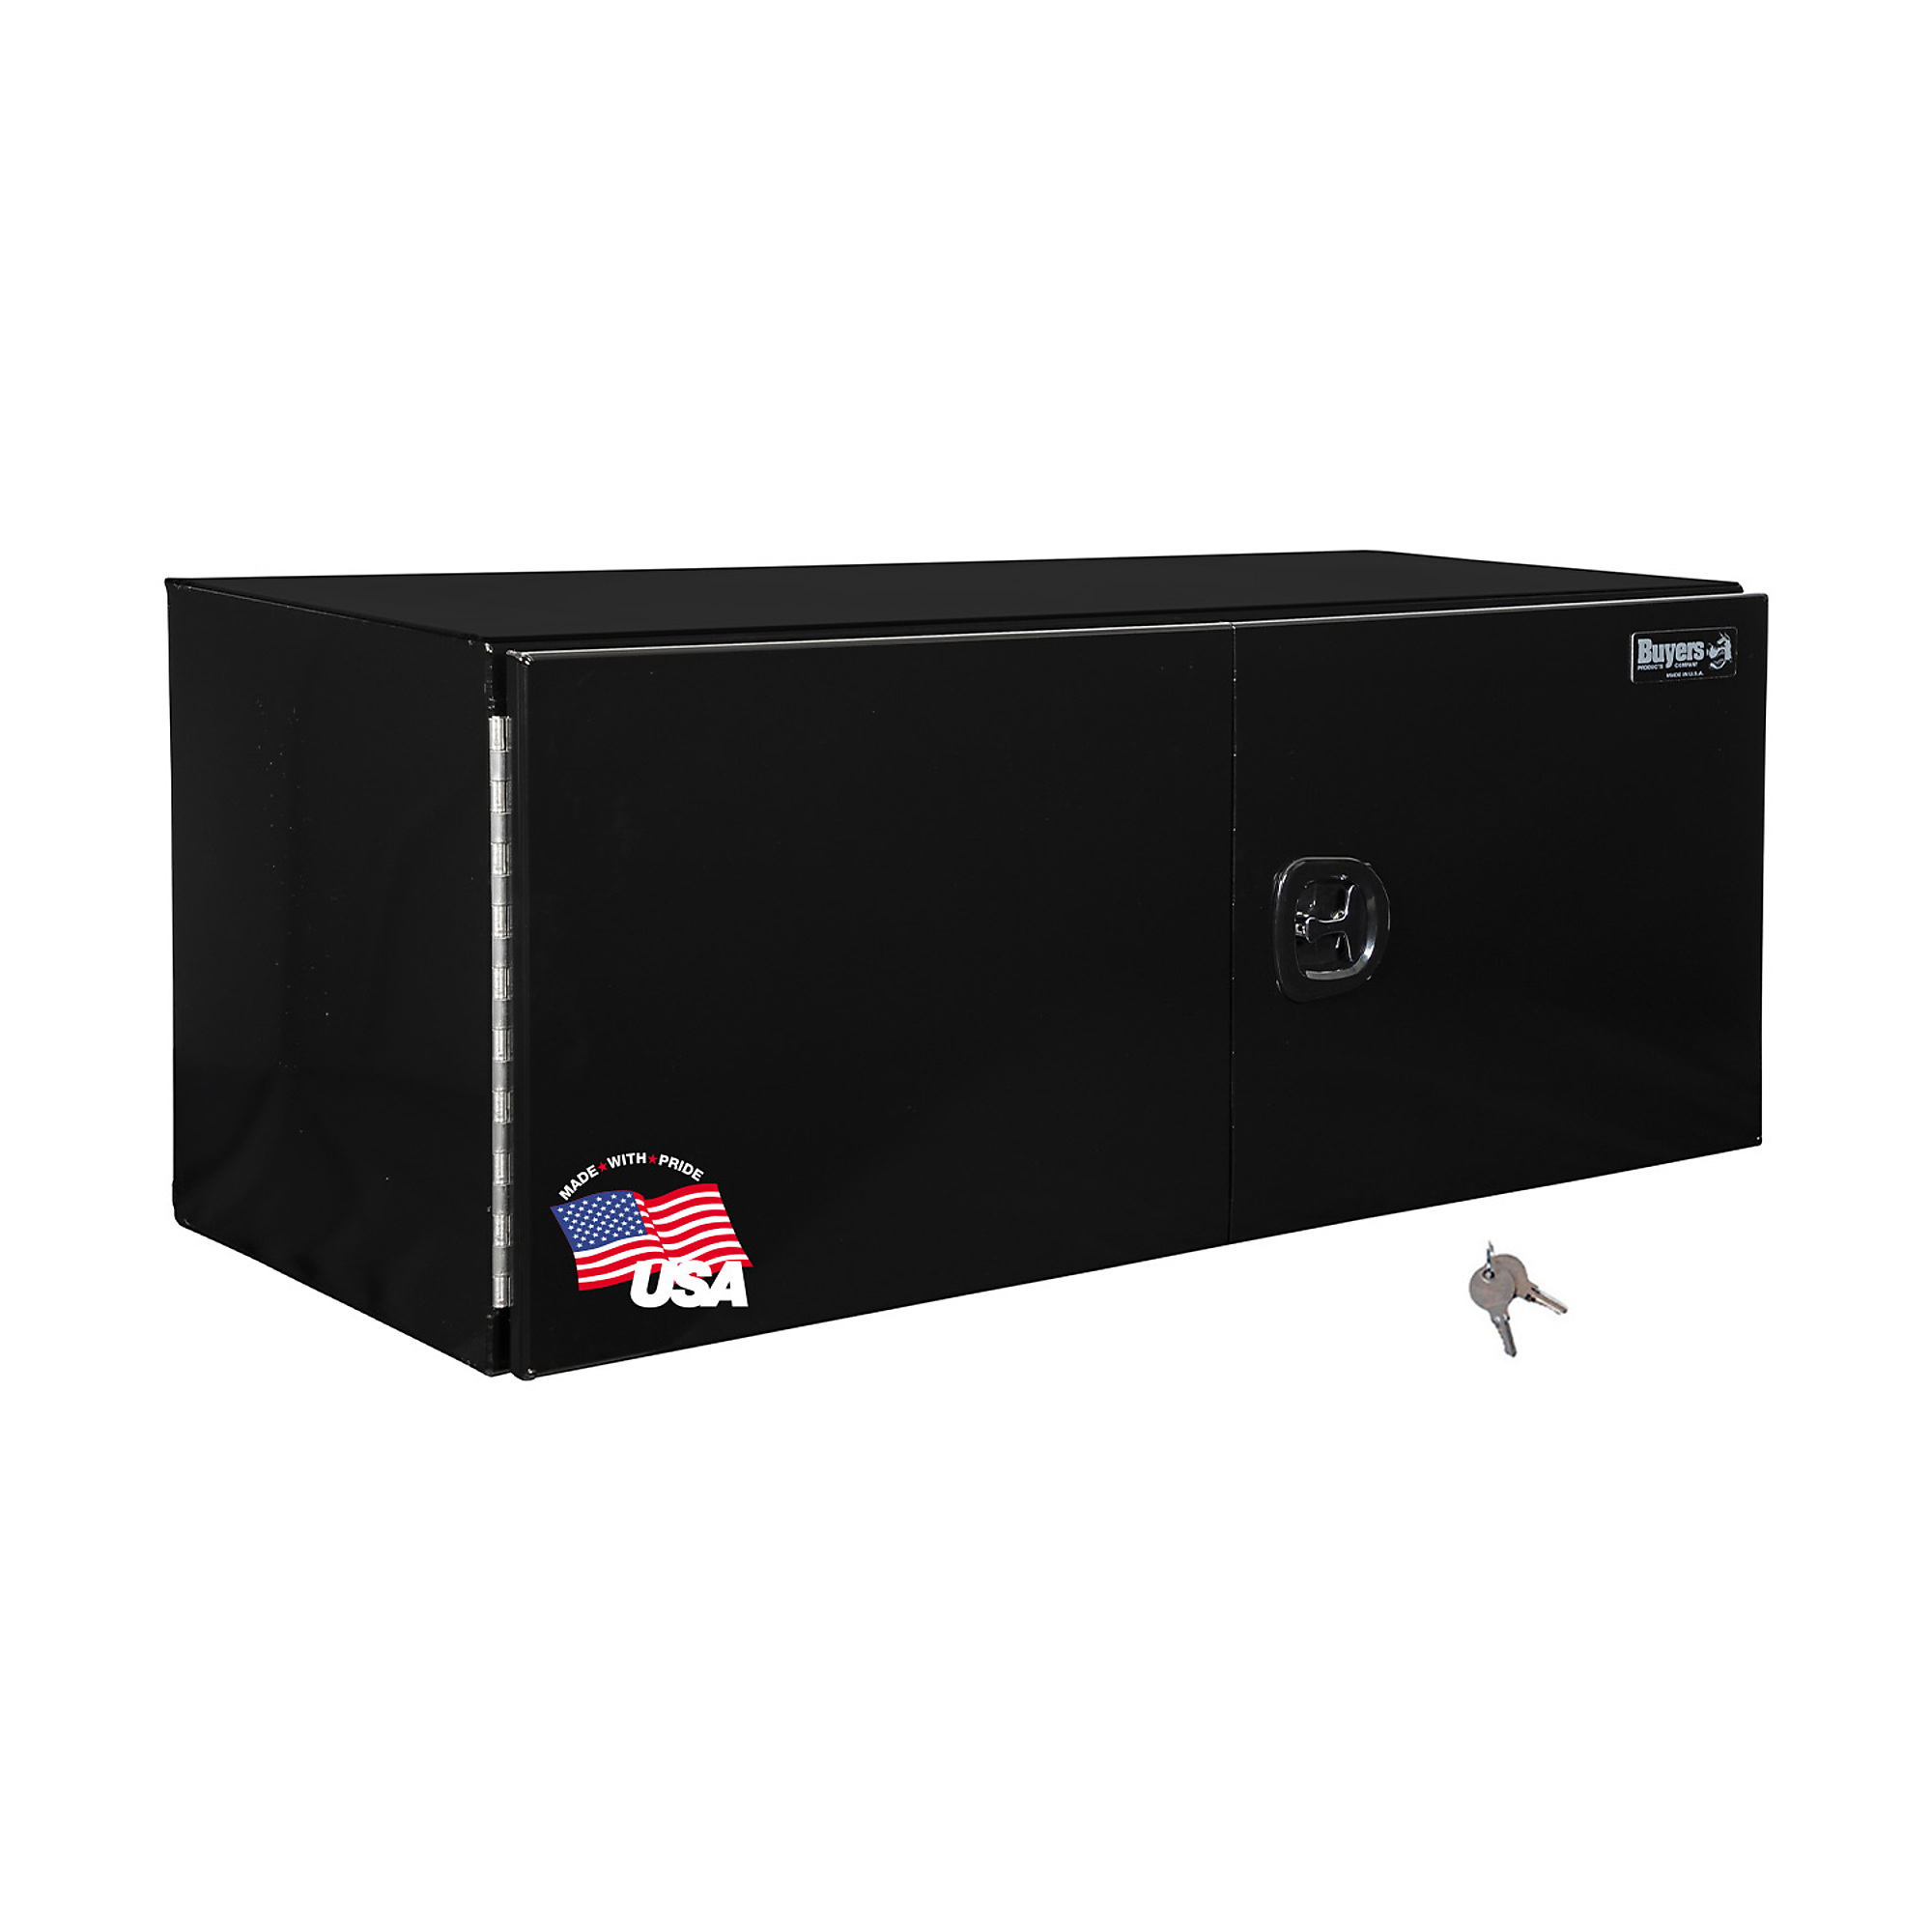 Buyers Products 24Inch Underbody Truck Tool Box, Aluminium Black, Model 1705825